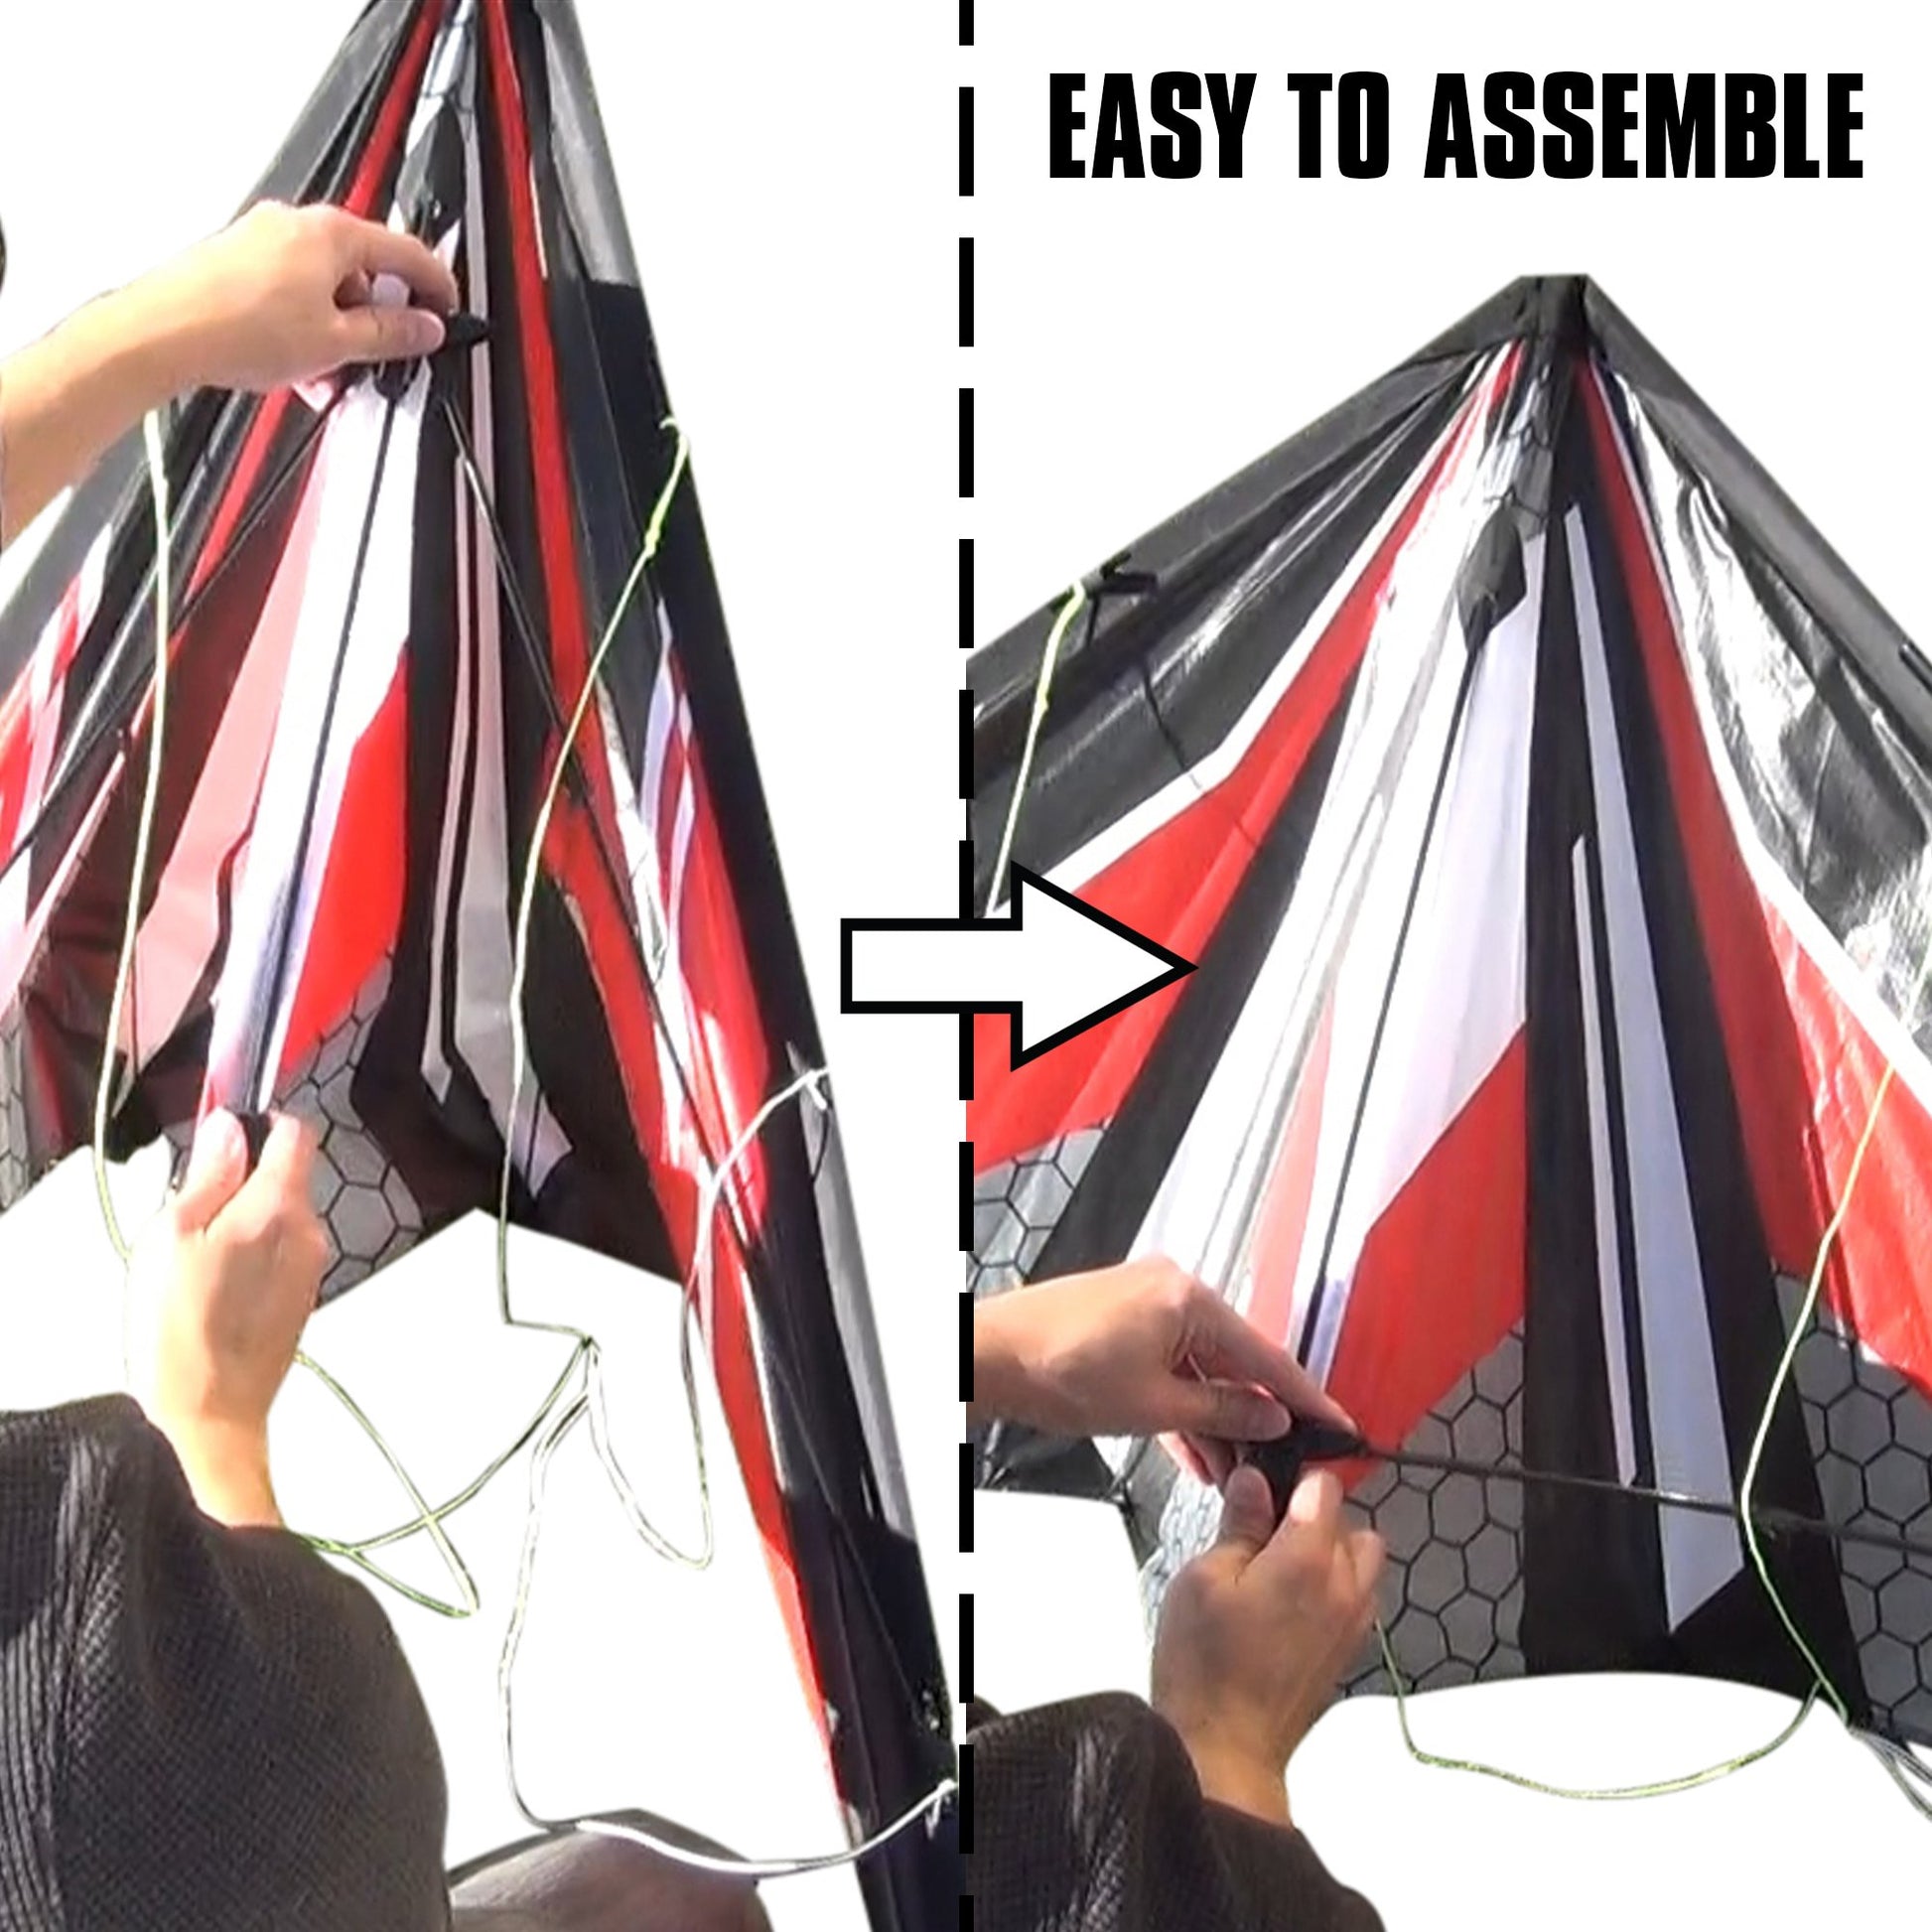 WindNSun EZ Sport 70 Dual Control Sport Kite Teal Stripe Nylon Kite packaging and contents